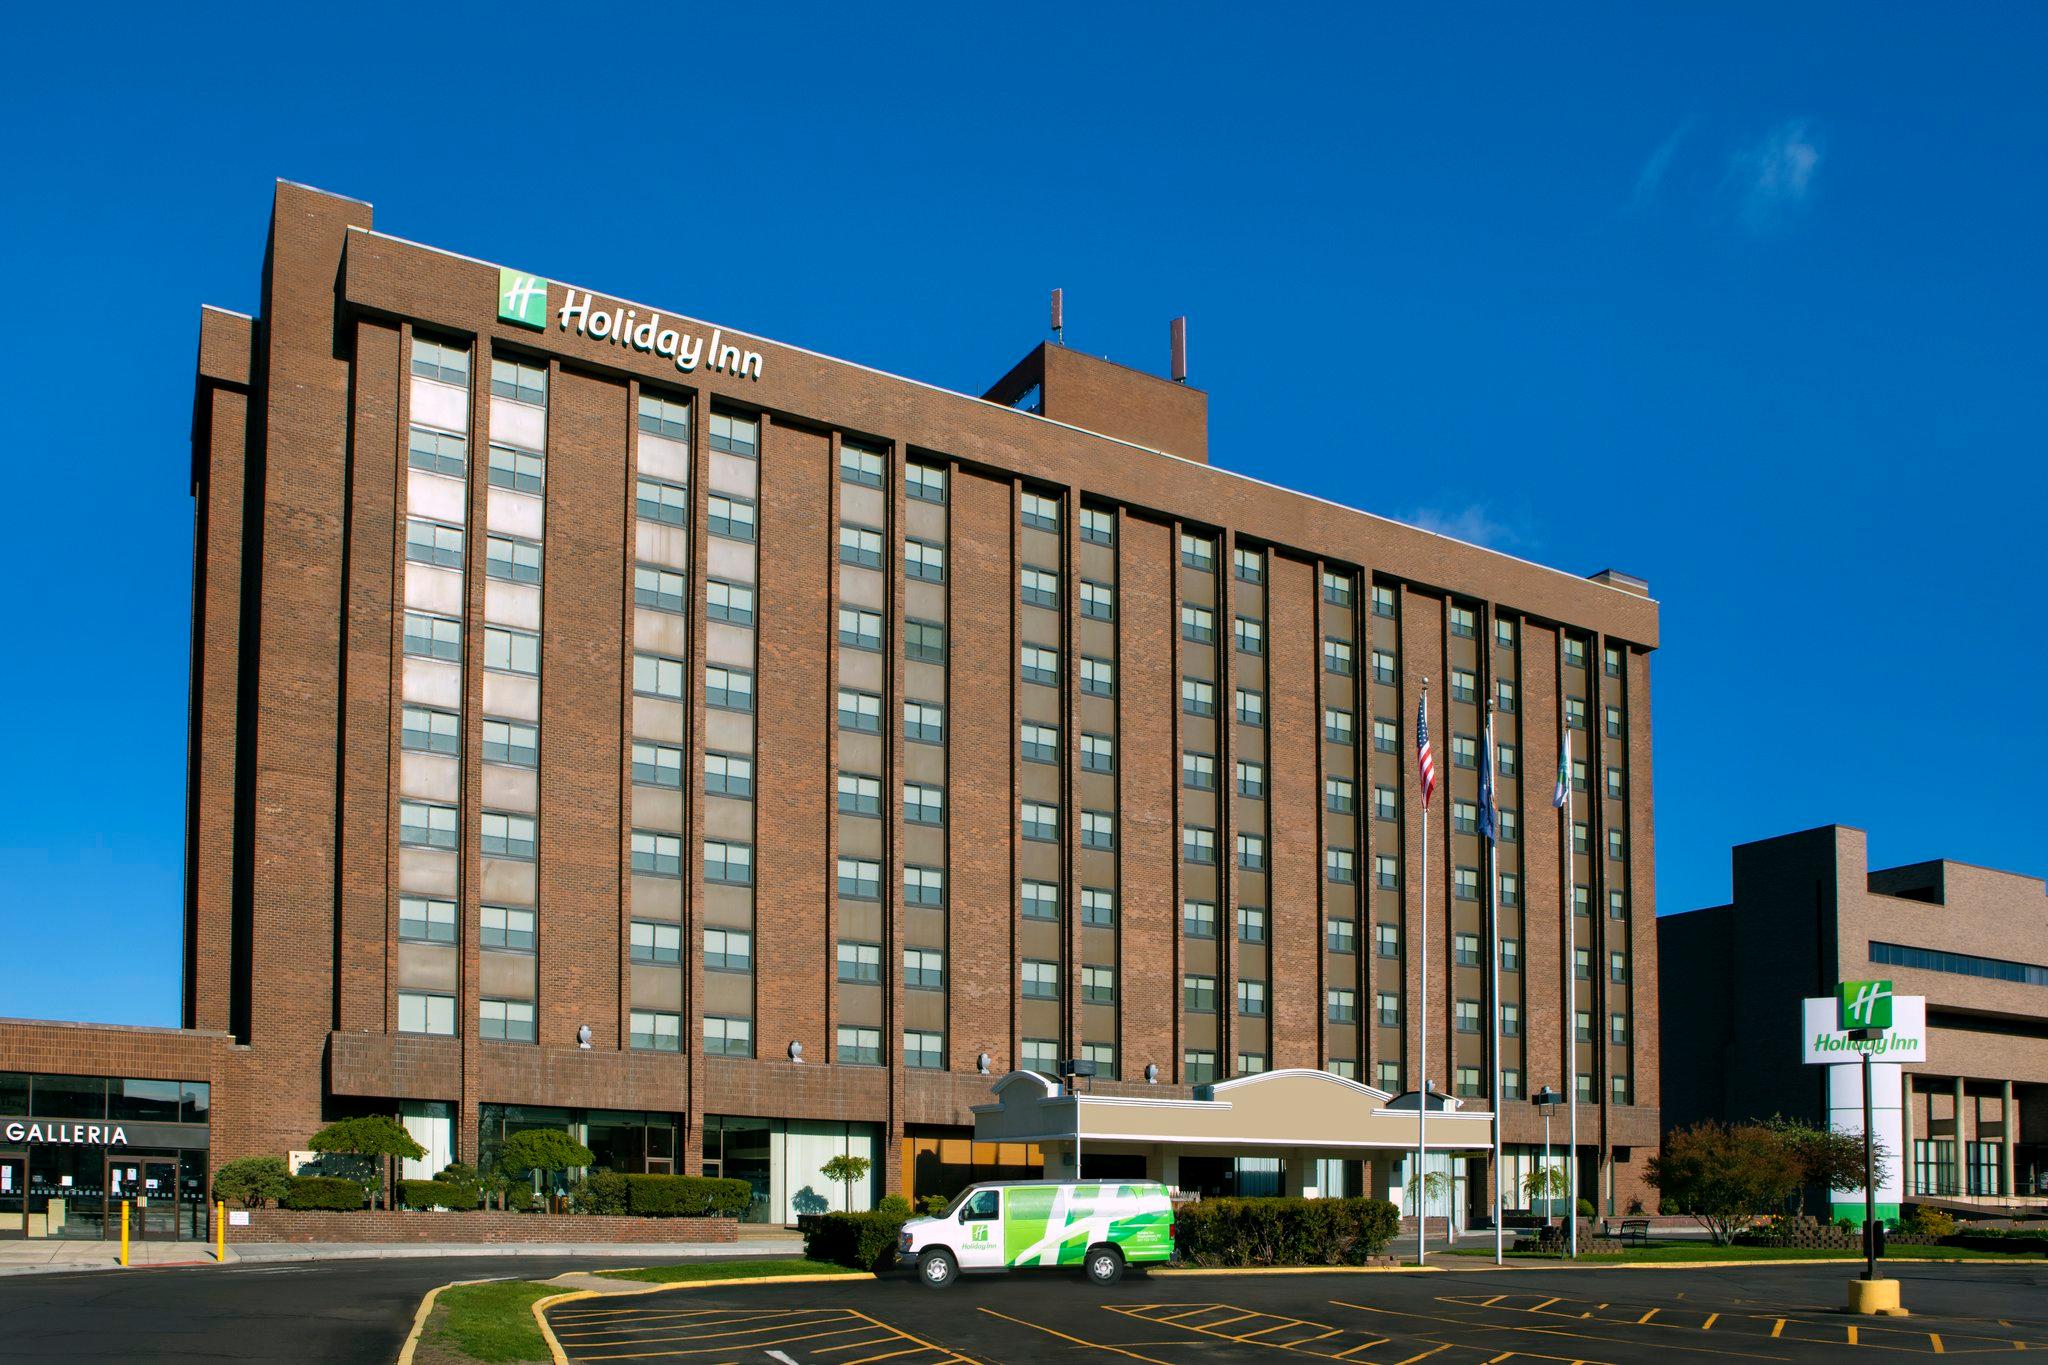 Holiday Inn Binghamton-Dwtn (Hawley St) in Binghamton, NY